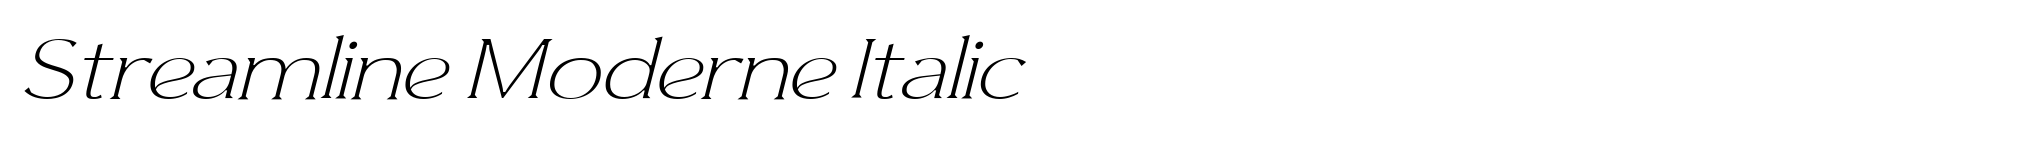 Streamline Moderne Italic image